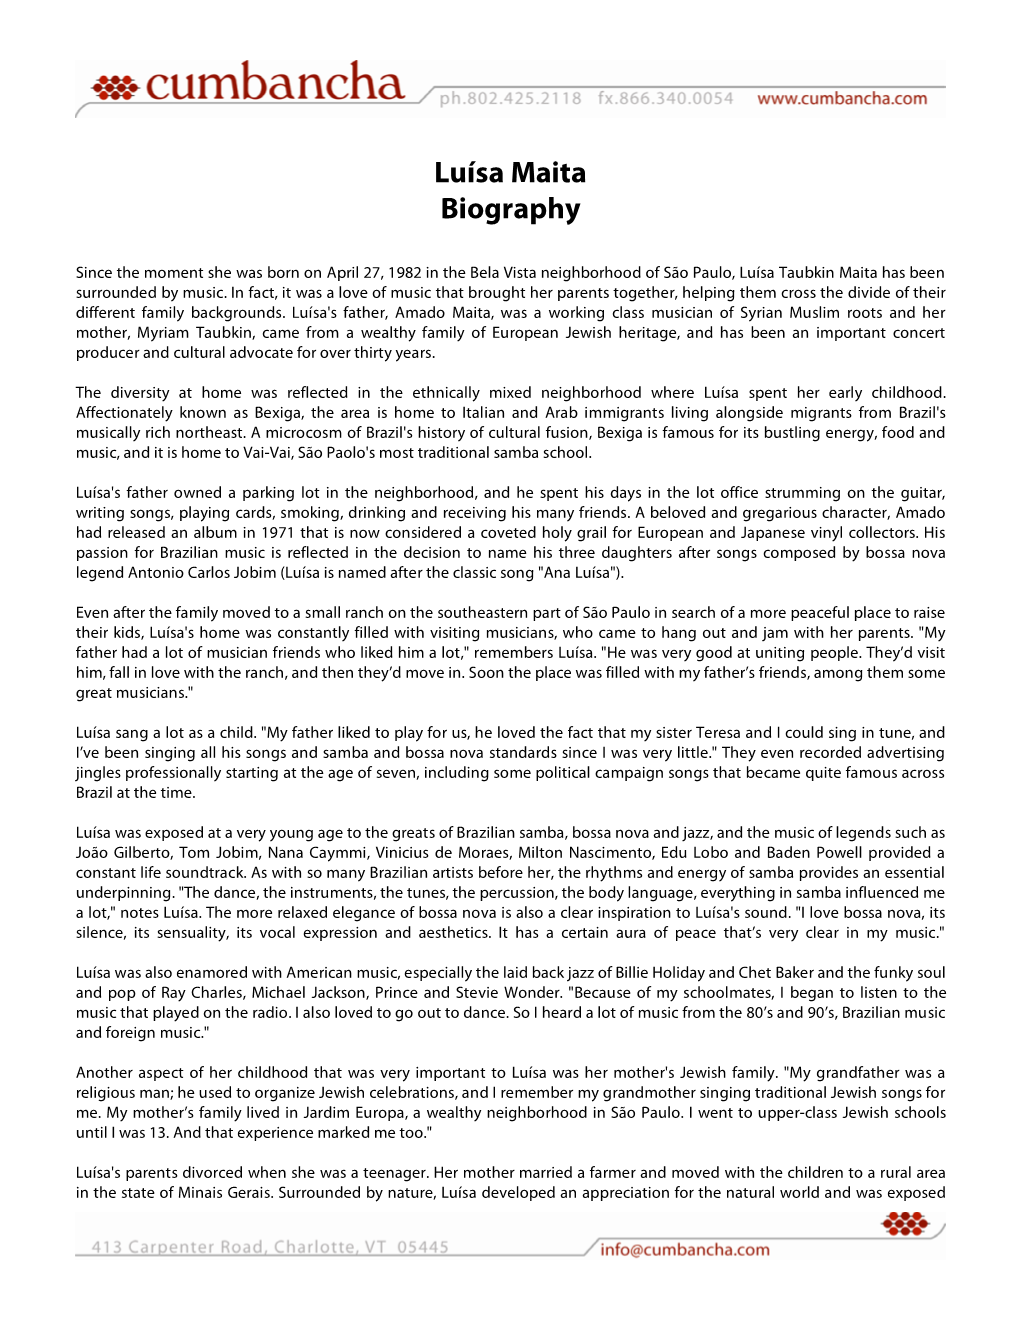 Luísa Maita Biography